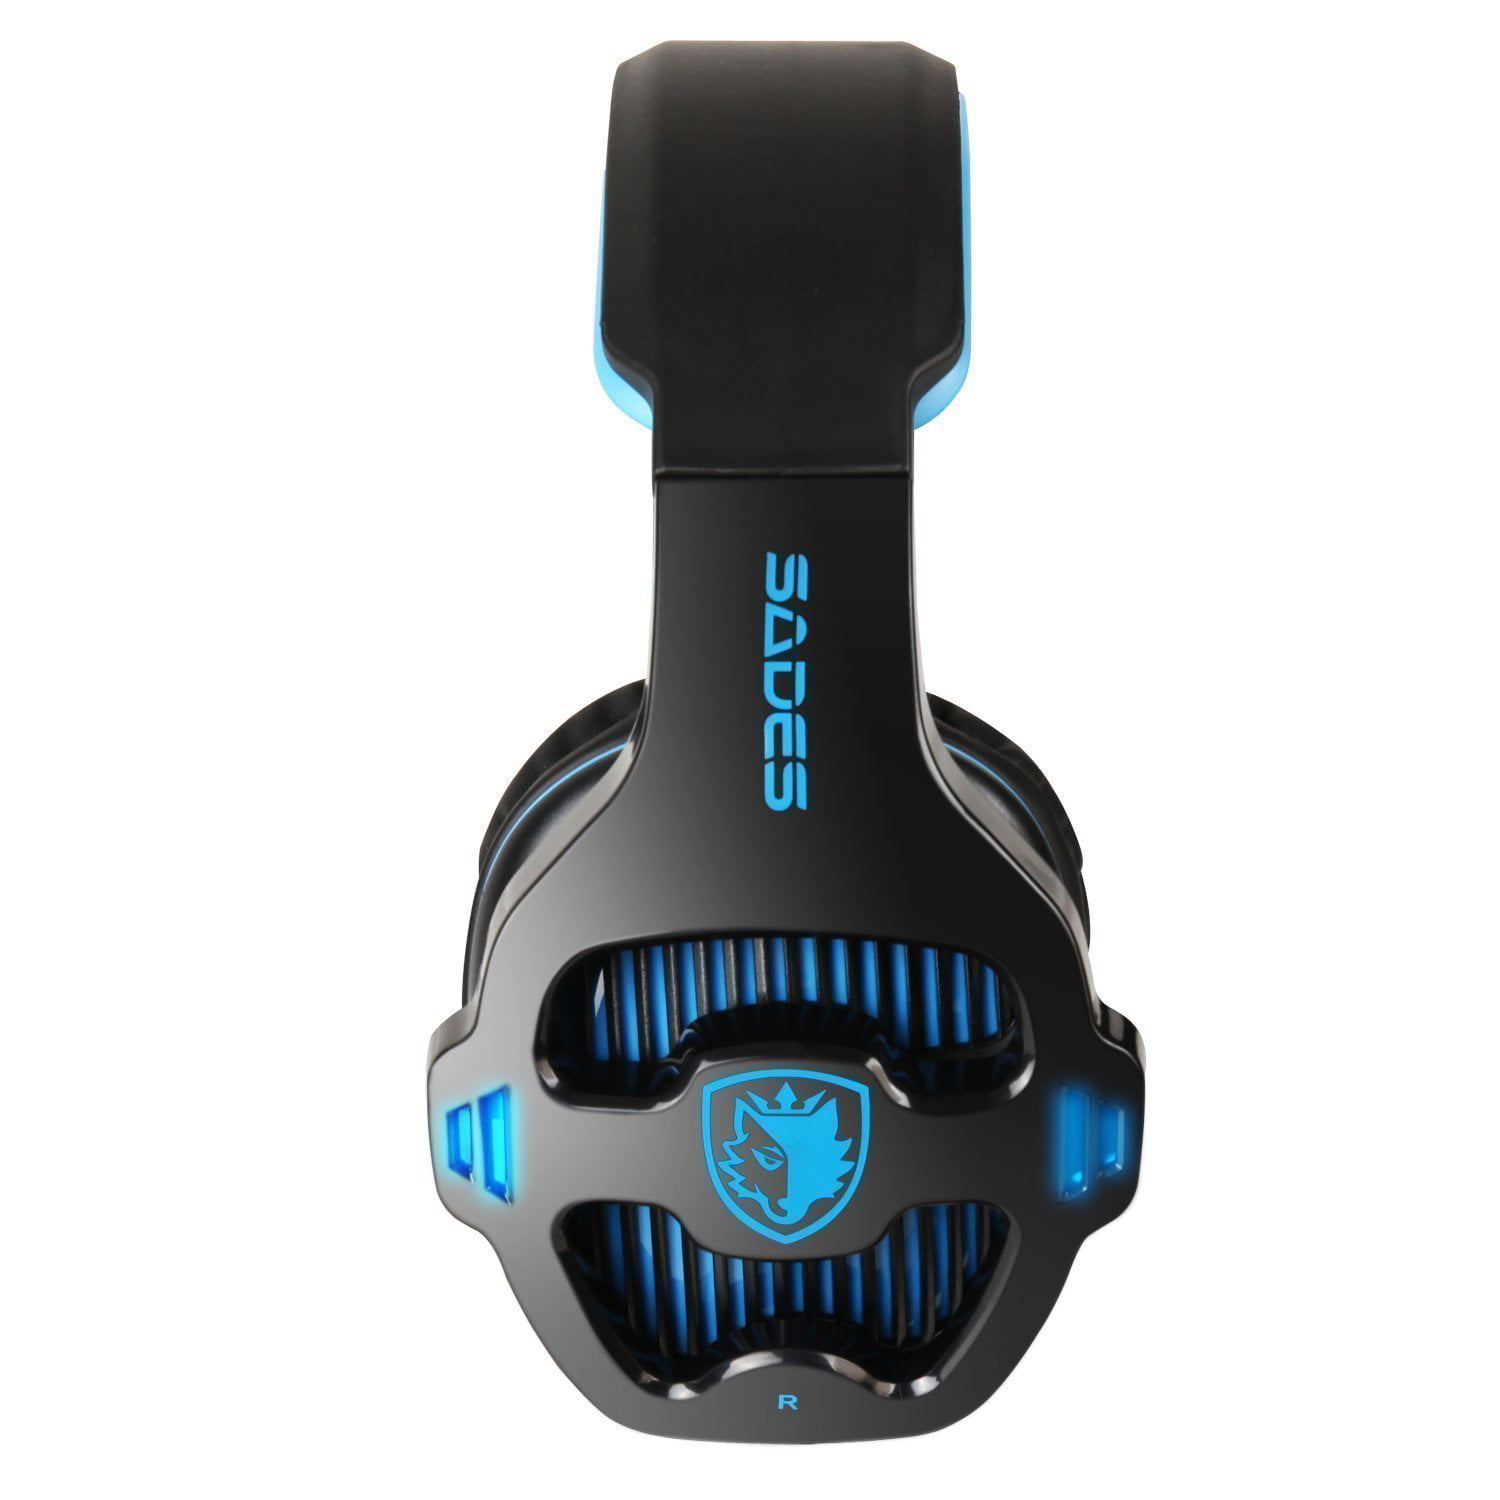 Sades Sa903 Usb 7 1 Surround Sound Stereo Gaming Headset With Mic For Pc Laptop Walmart Com Walmart Com